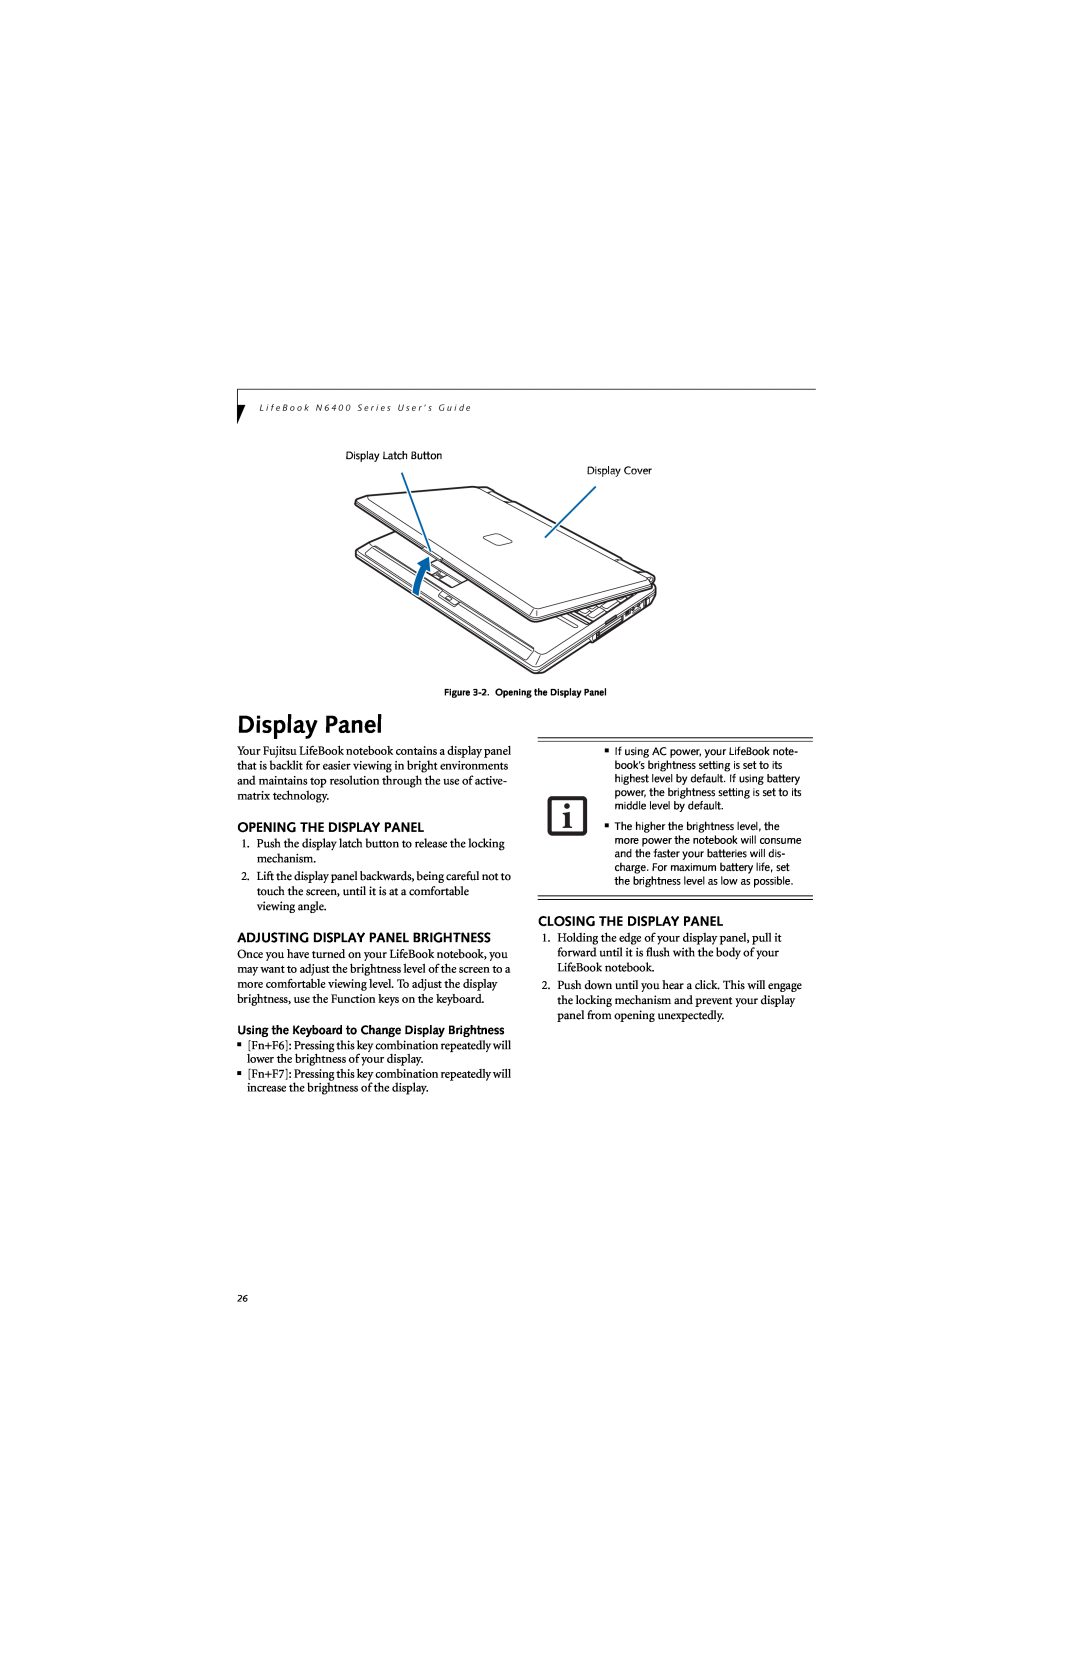 Fujitsu N6460 manual Opening The Display Panel, Adjusting Display Panel Brightness, Closing The Display Panel 